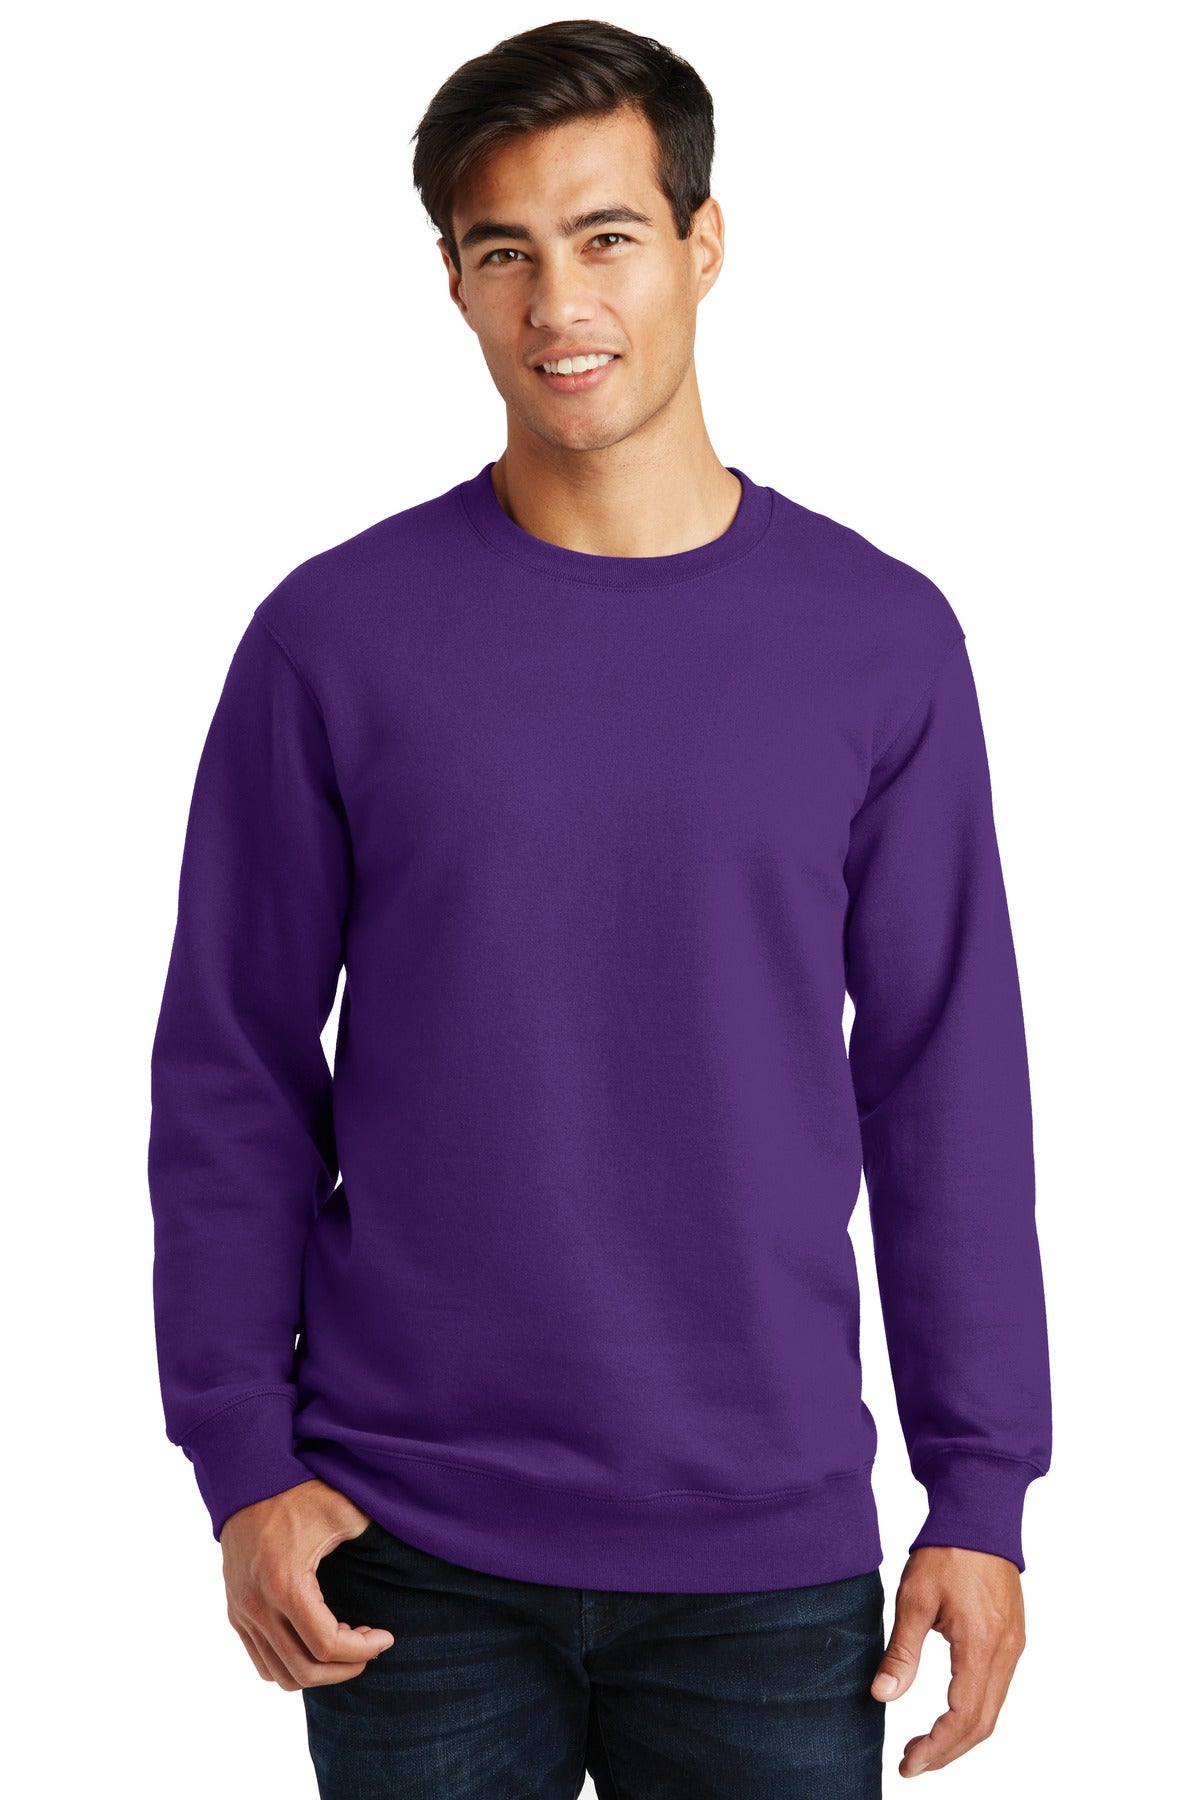 Port & Company® Fan Favorite Fleece Crewneck Sweatshirt. PC850 [Team Purple] - DFW Impression